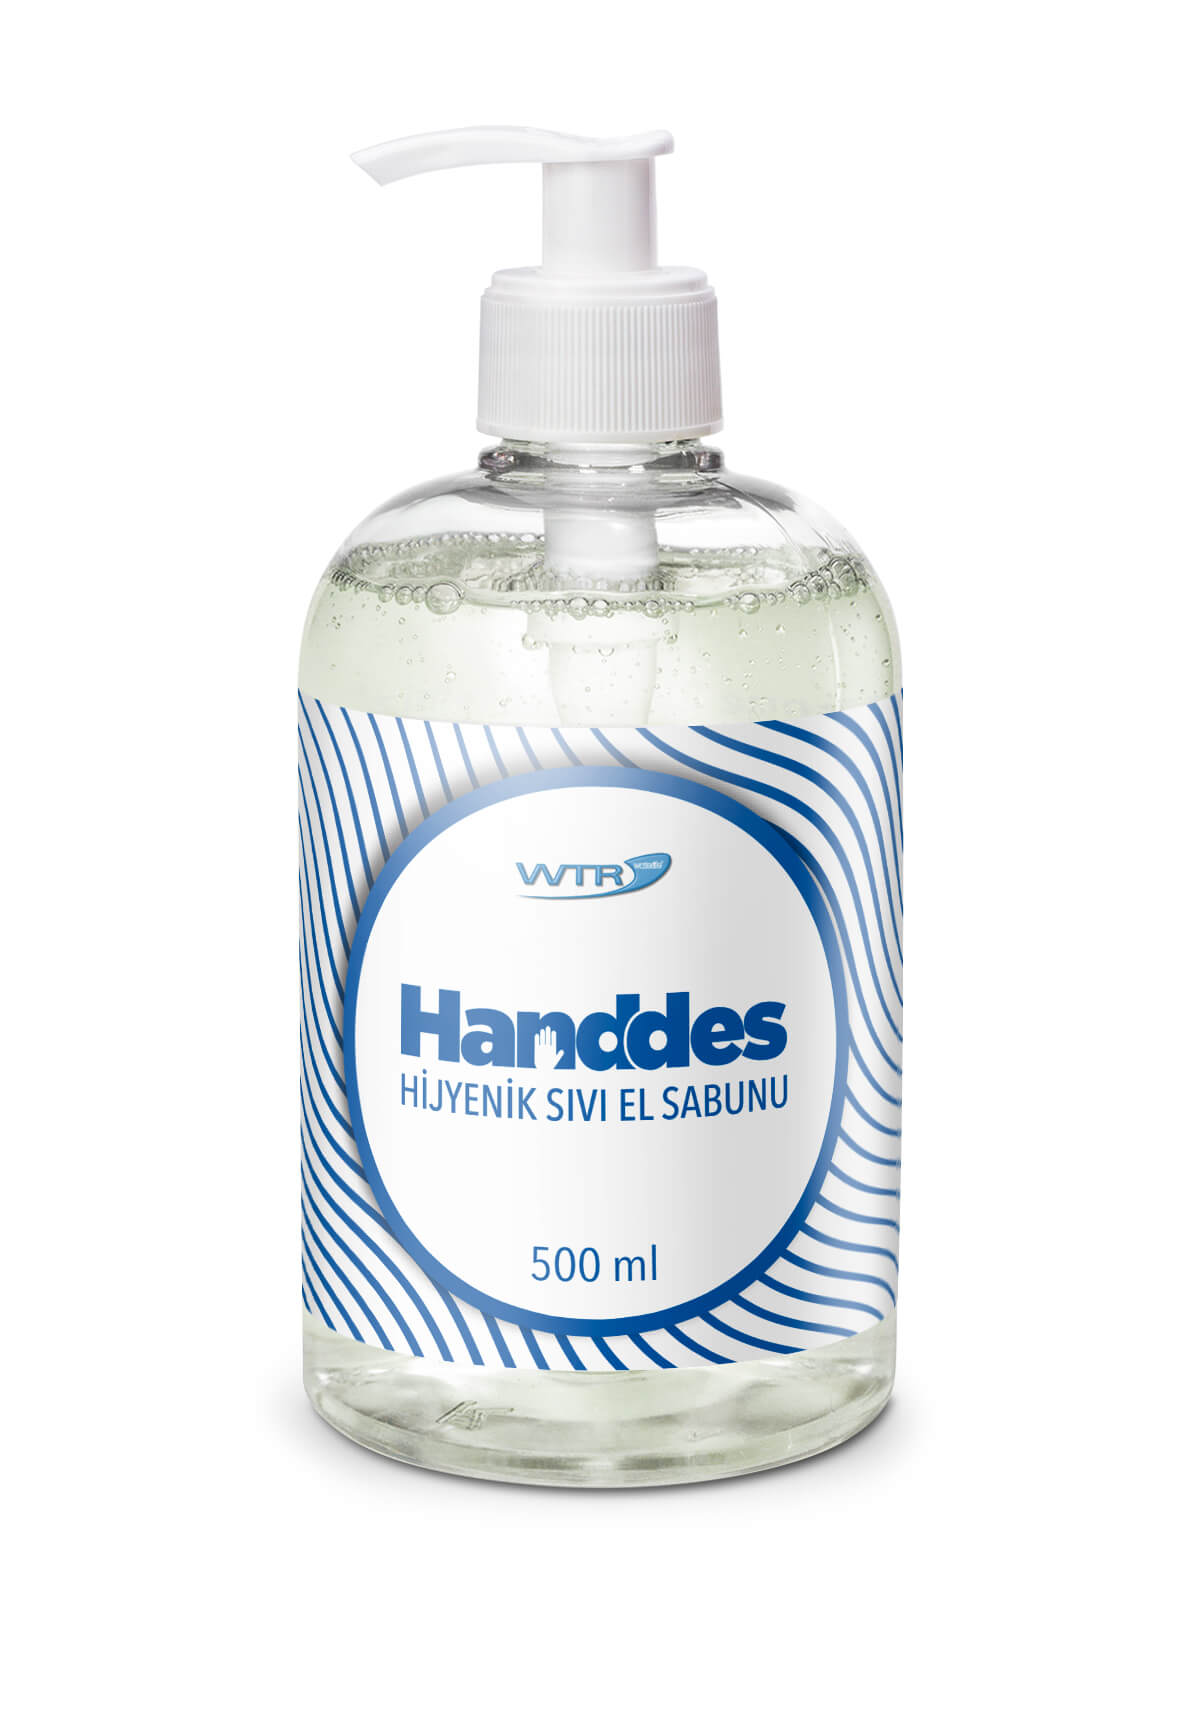 WTR HANDDES HYGIENIC LIQUID HAND SOAP